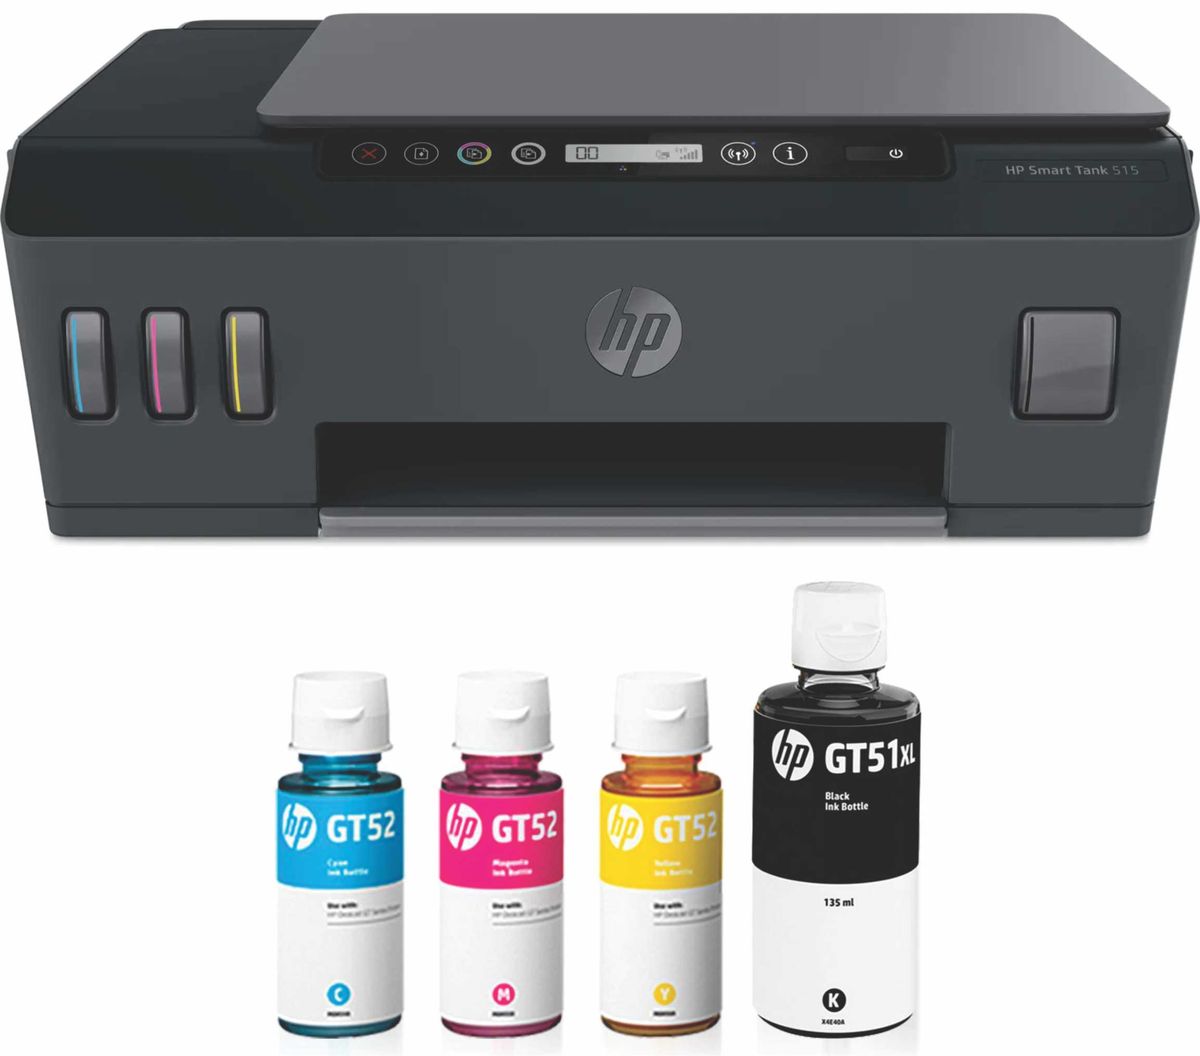 HP Smart Tank 515 Printer with extra set of Ink bottles cartridges